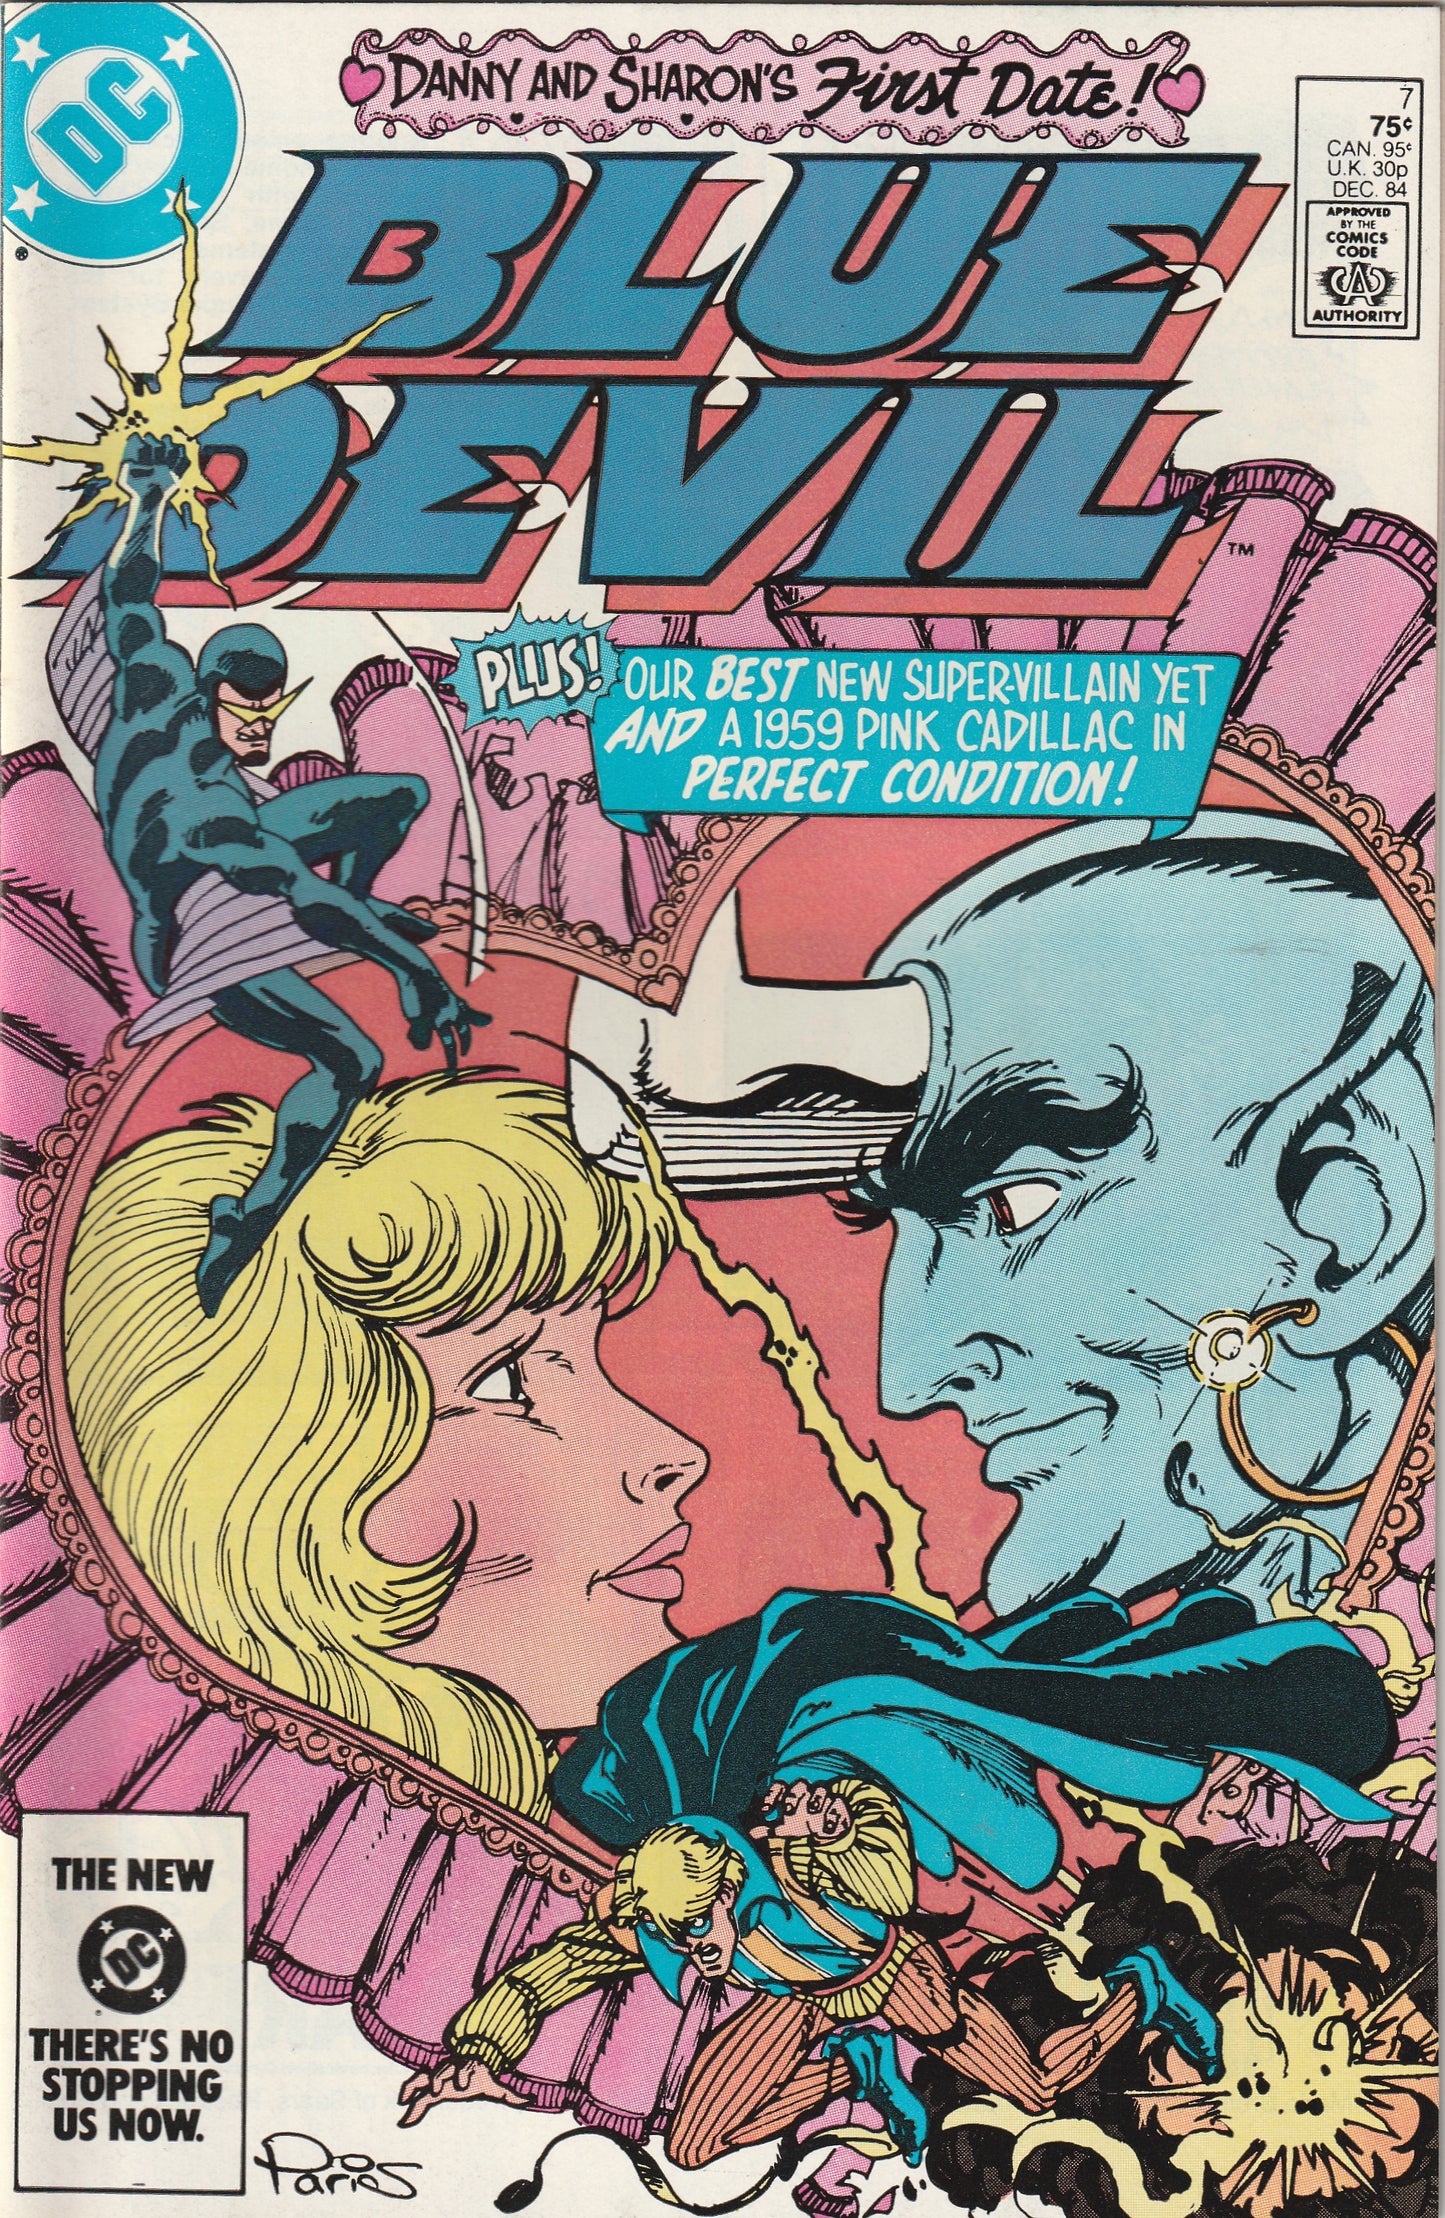 Blue Devil #7 (1984)